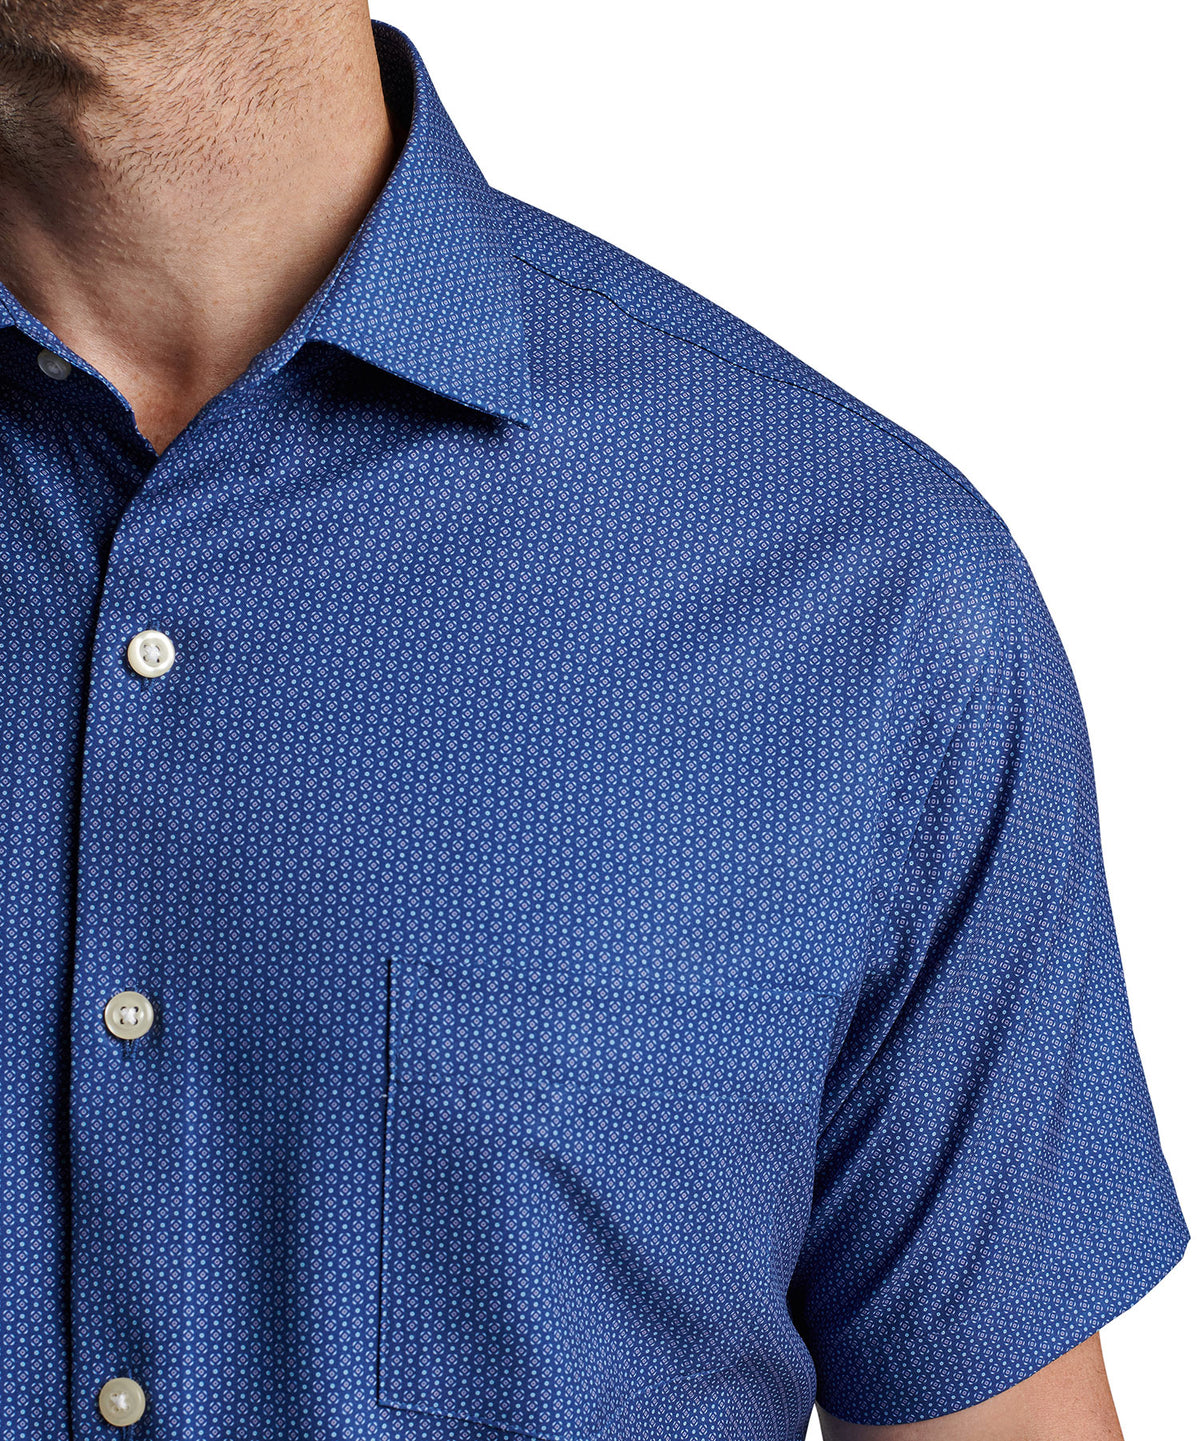 Peter Millar Bloques Print Short Sleeve Spread Collar Sport Shirt, Men's Big & Tall